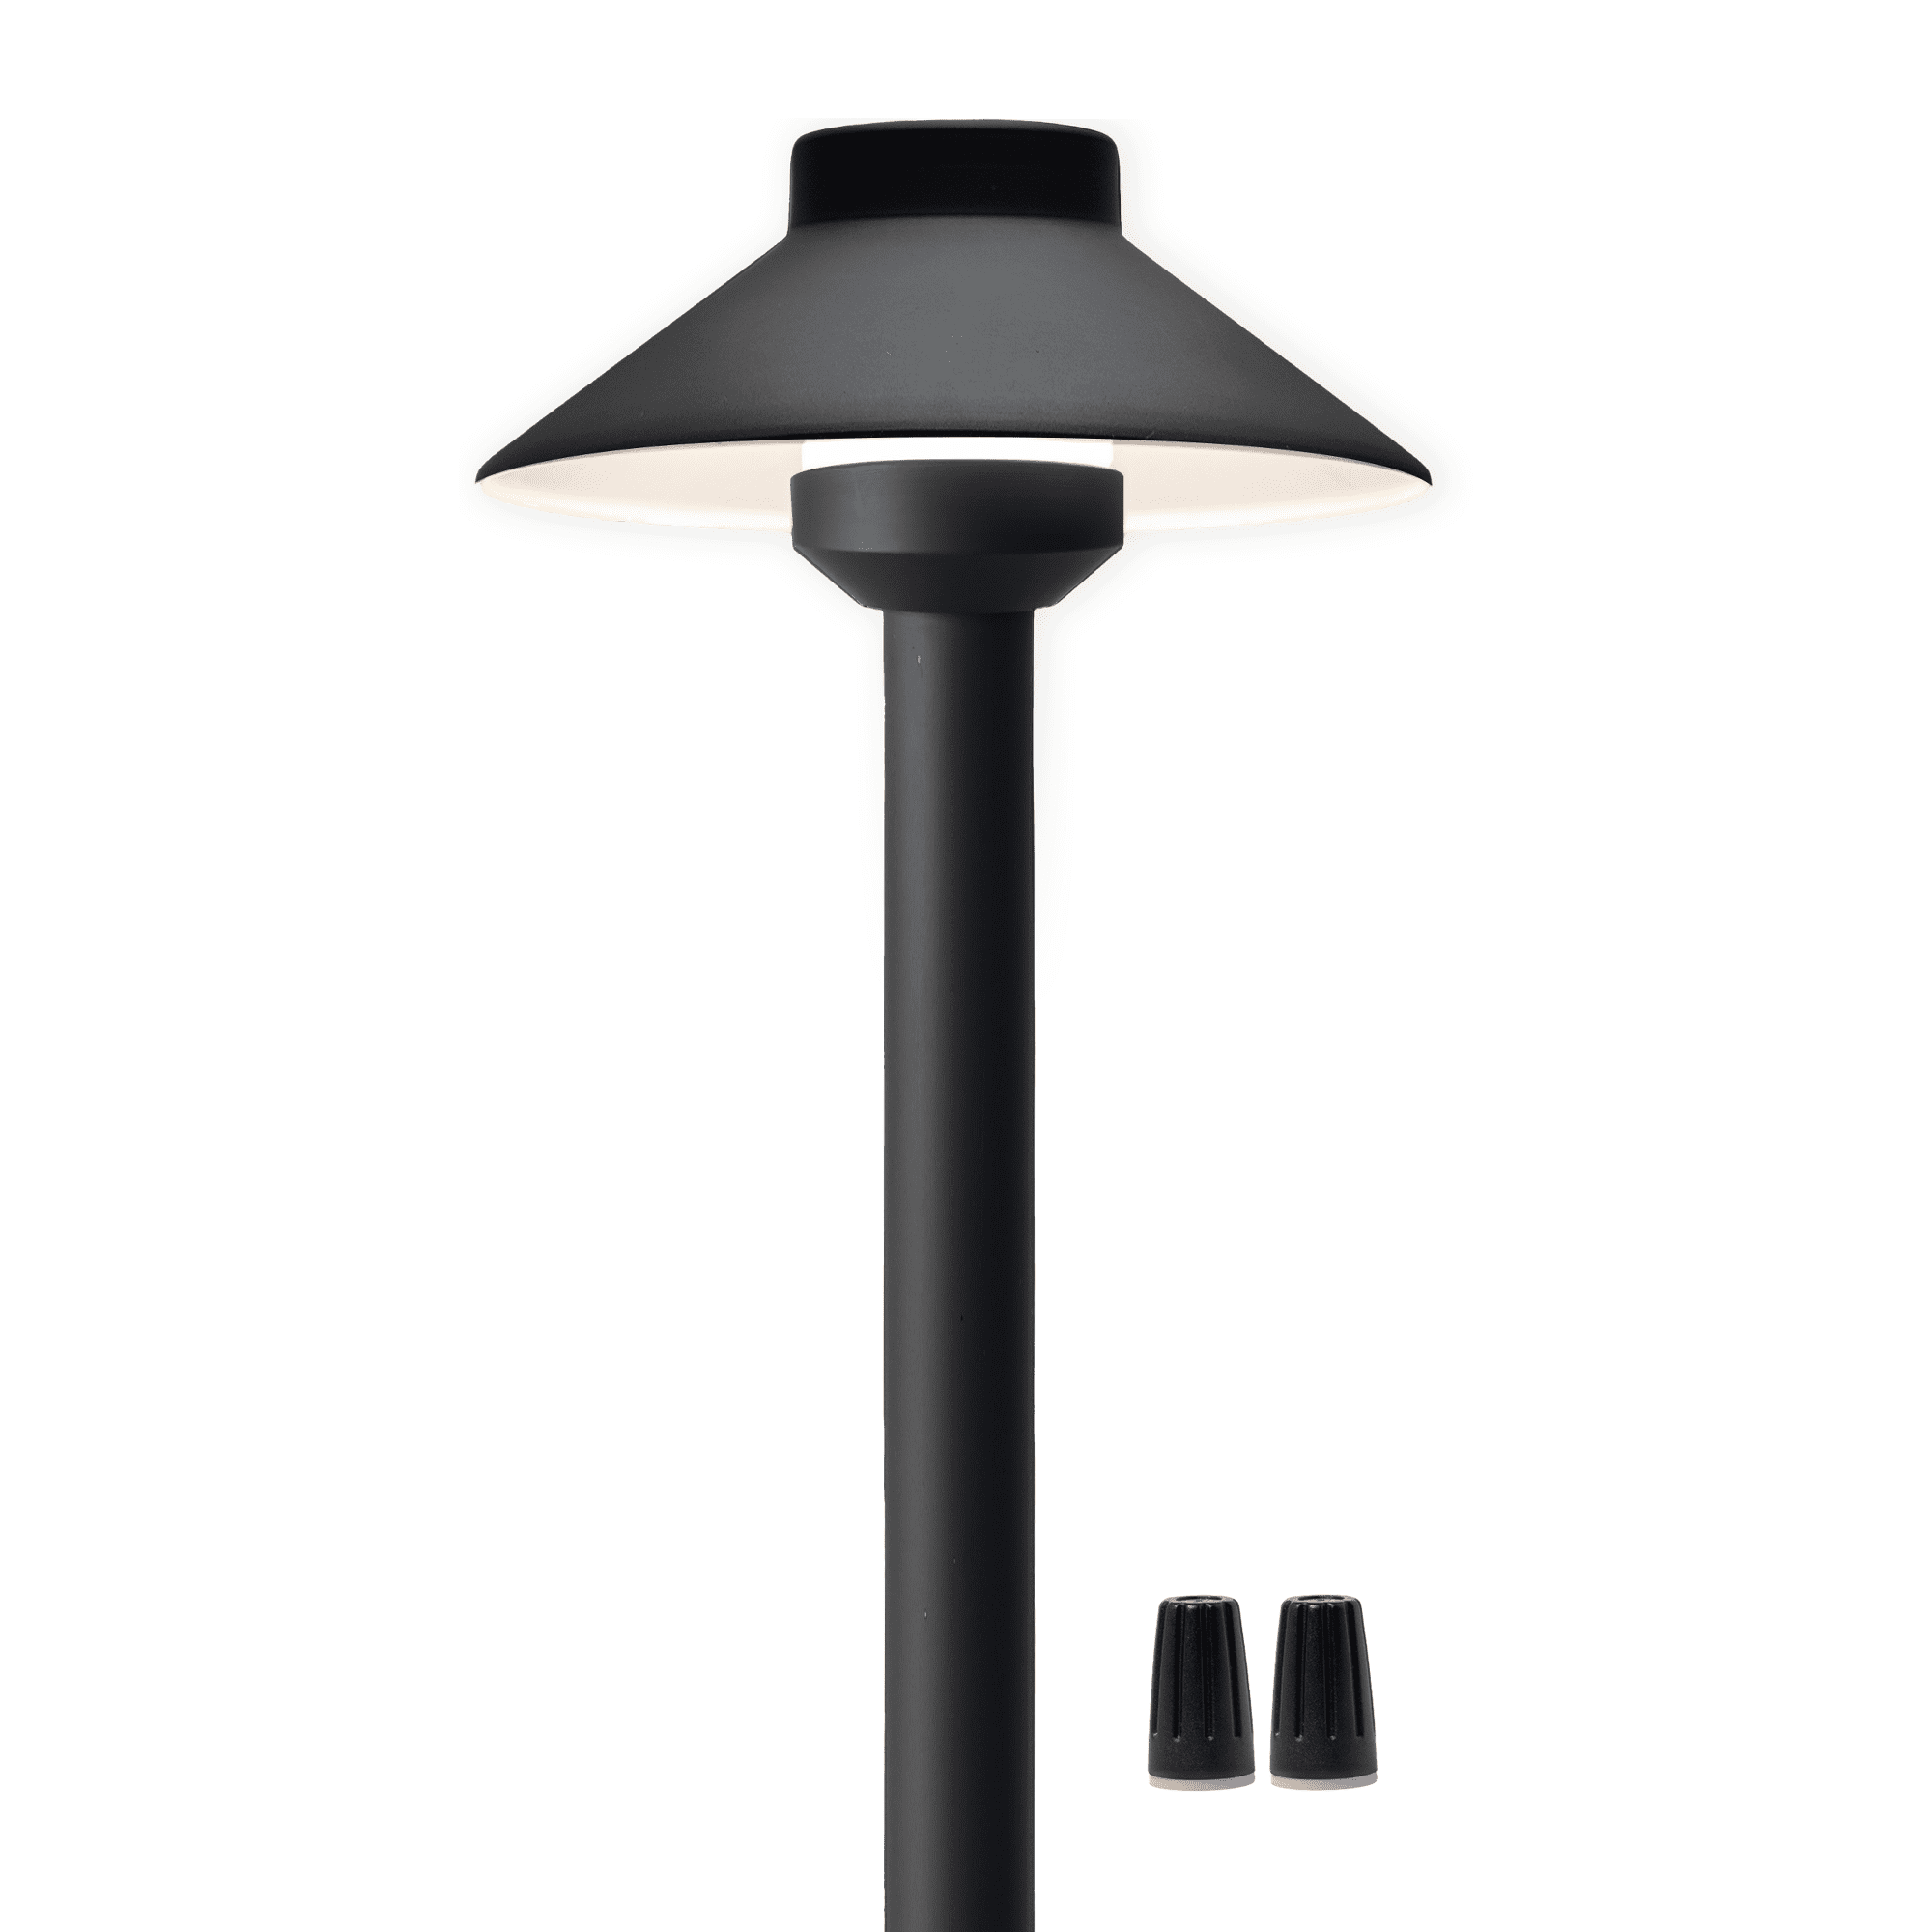 Gardenreet Brass Low Voltage Pathway Lights, 12V Outdoor LED Landscape Path Lights(Premium Flat Hat) for Walkway Driveway Garden Yard